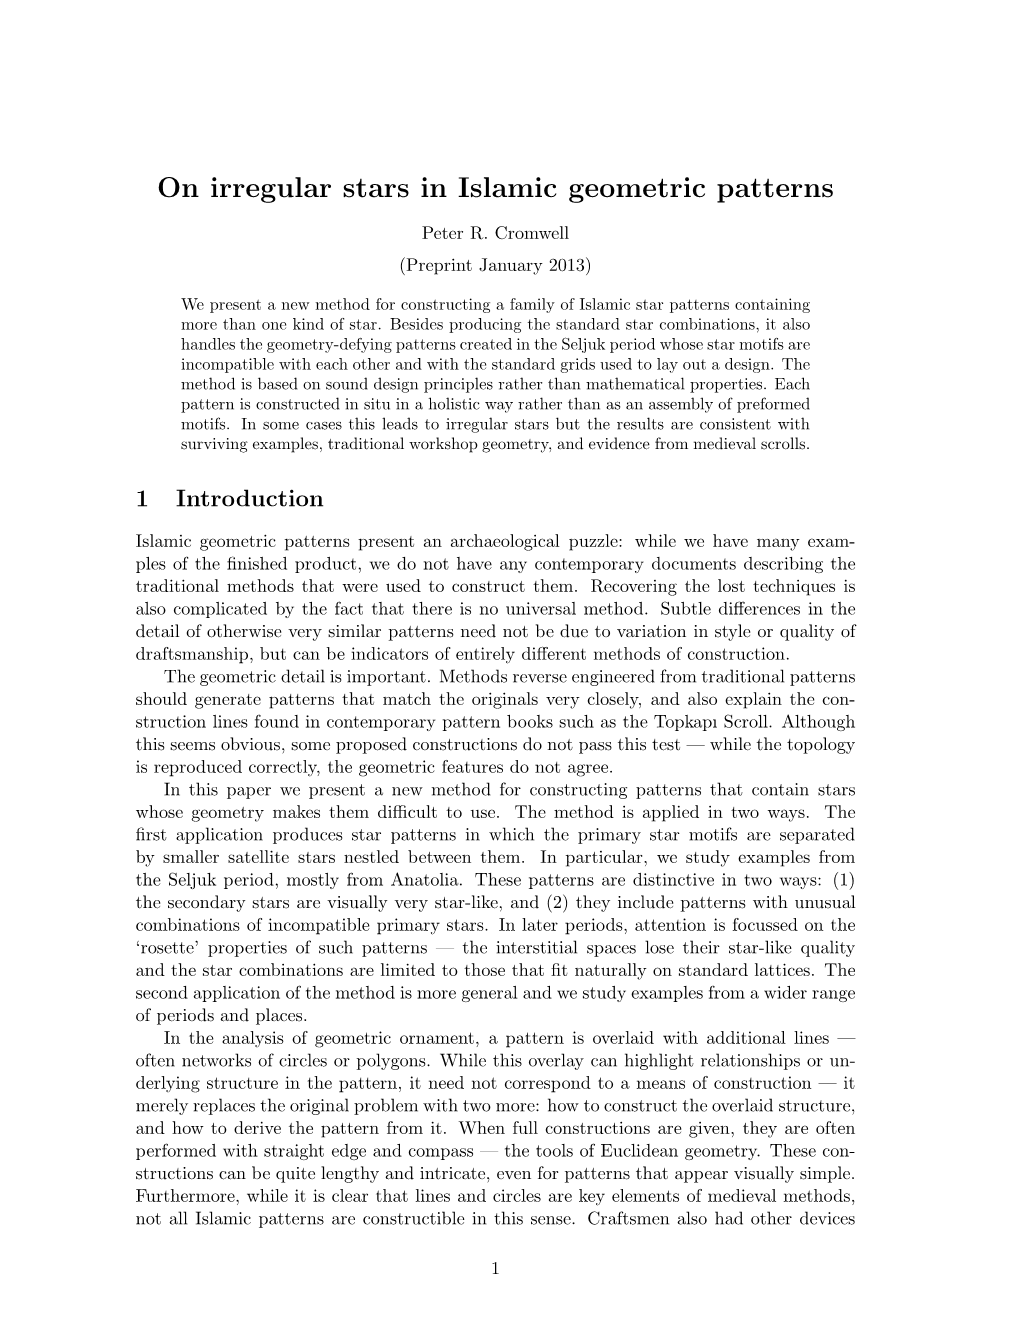 On Irregular Stars in Islamic Geometric Patterns